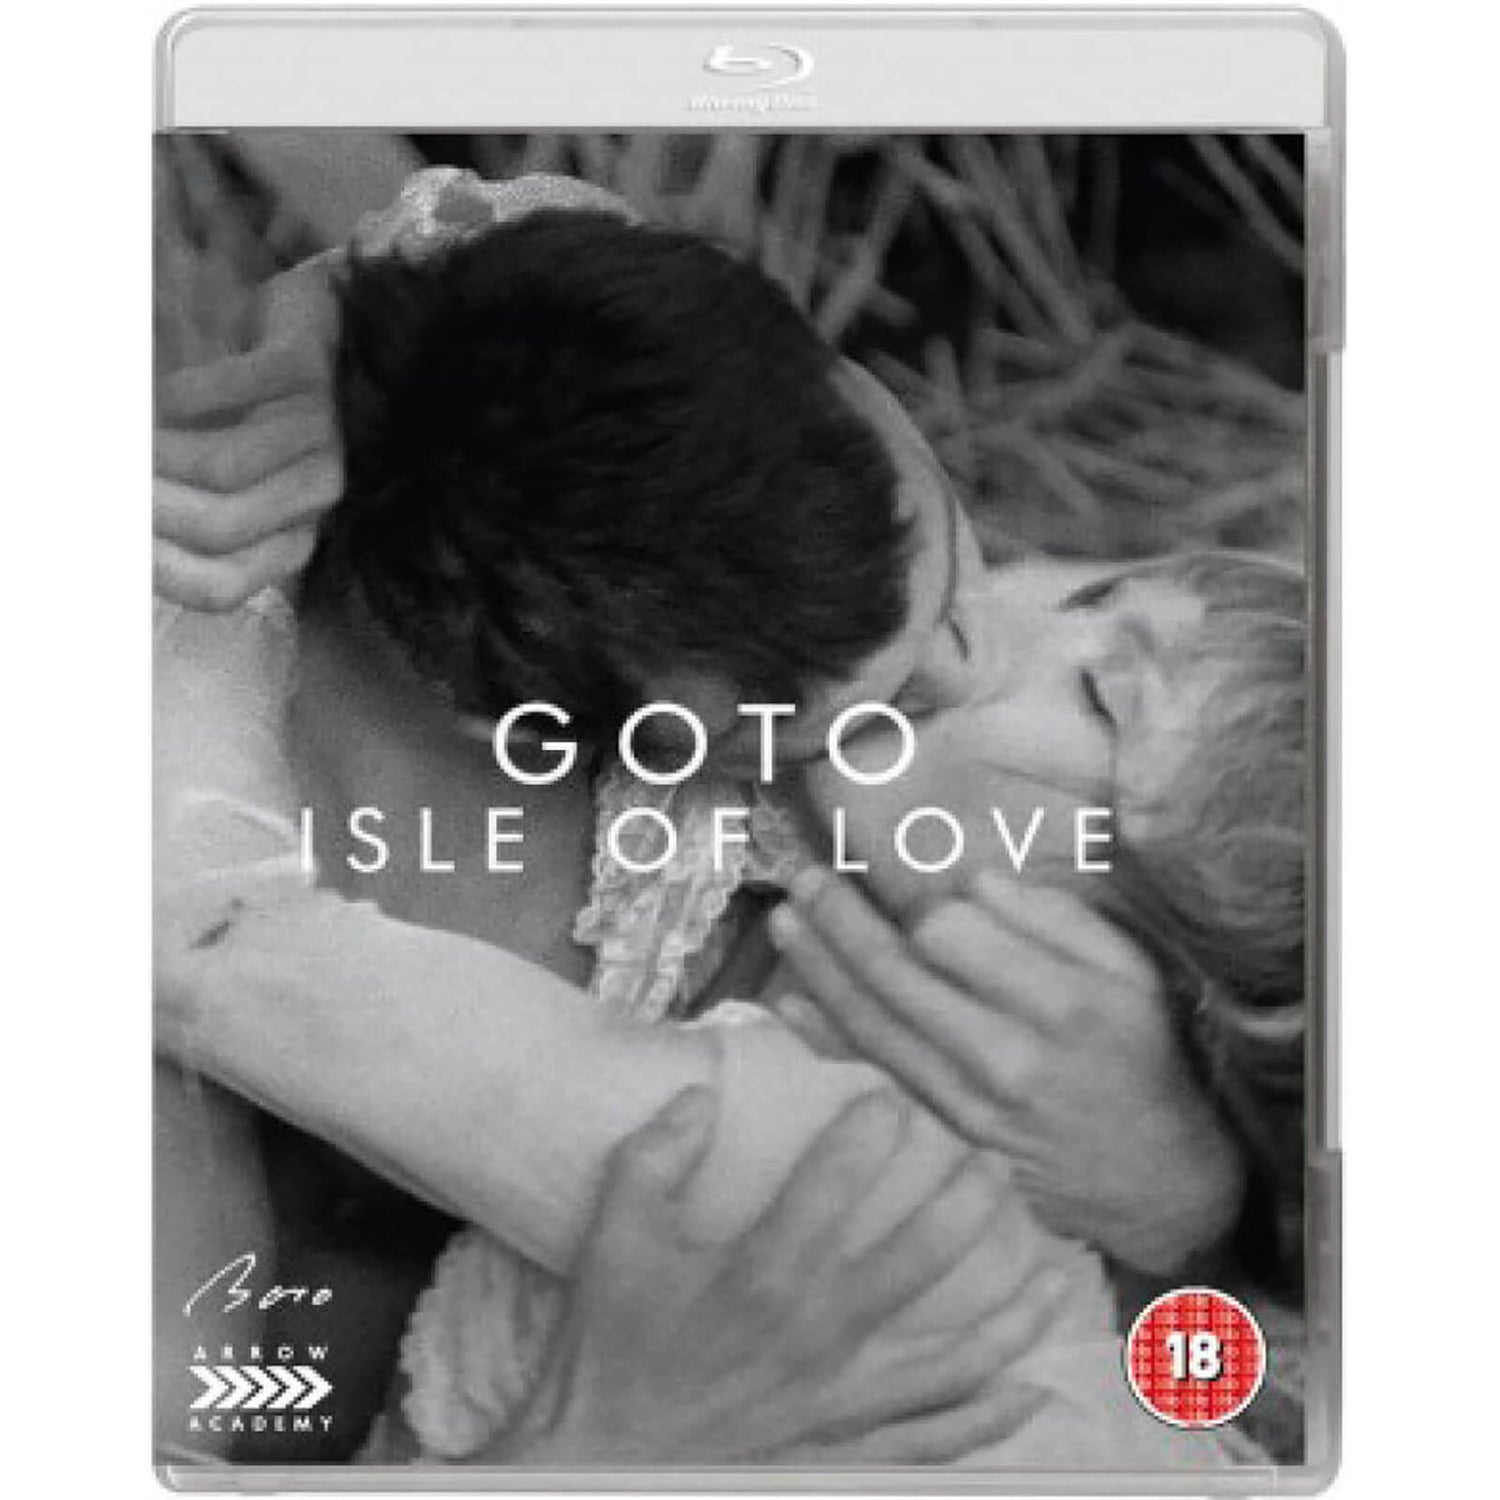 Goto, Isle of love (Includes DVD)